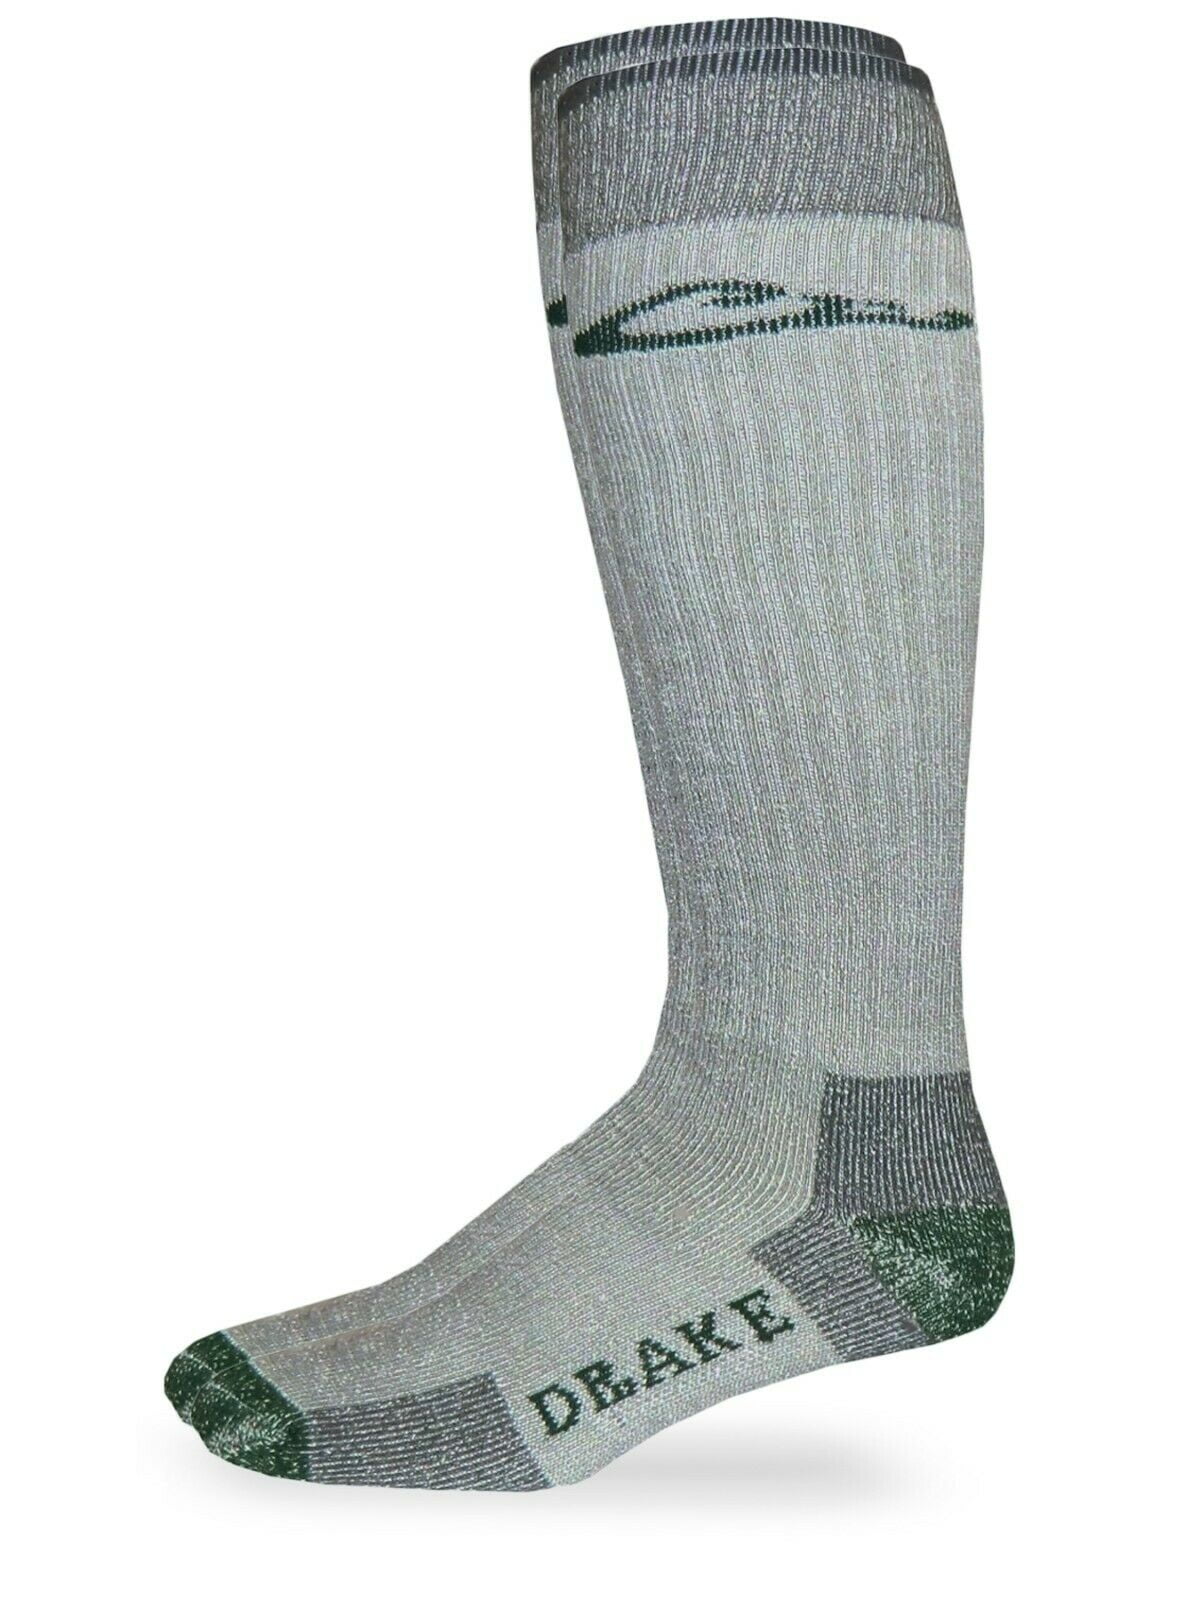 Drake Waterfowl - Drake Mens Socks, Big & Tall 80% Merino Wool Tall ...